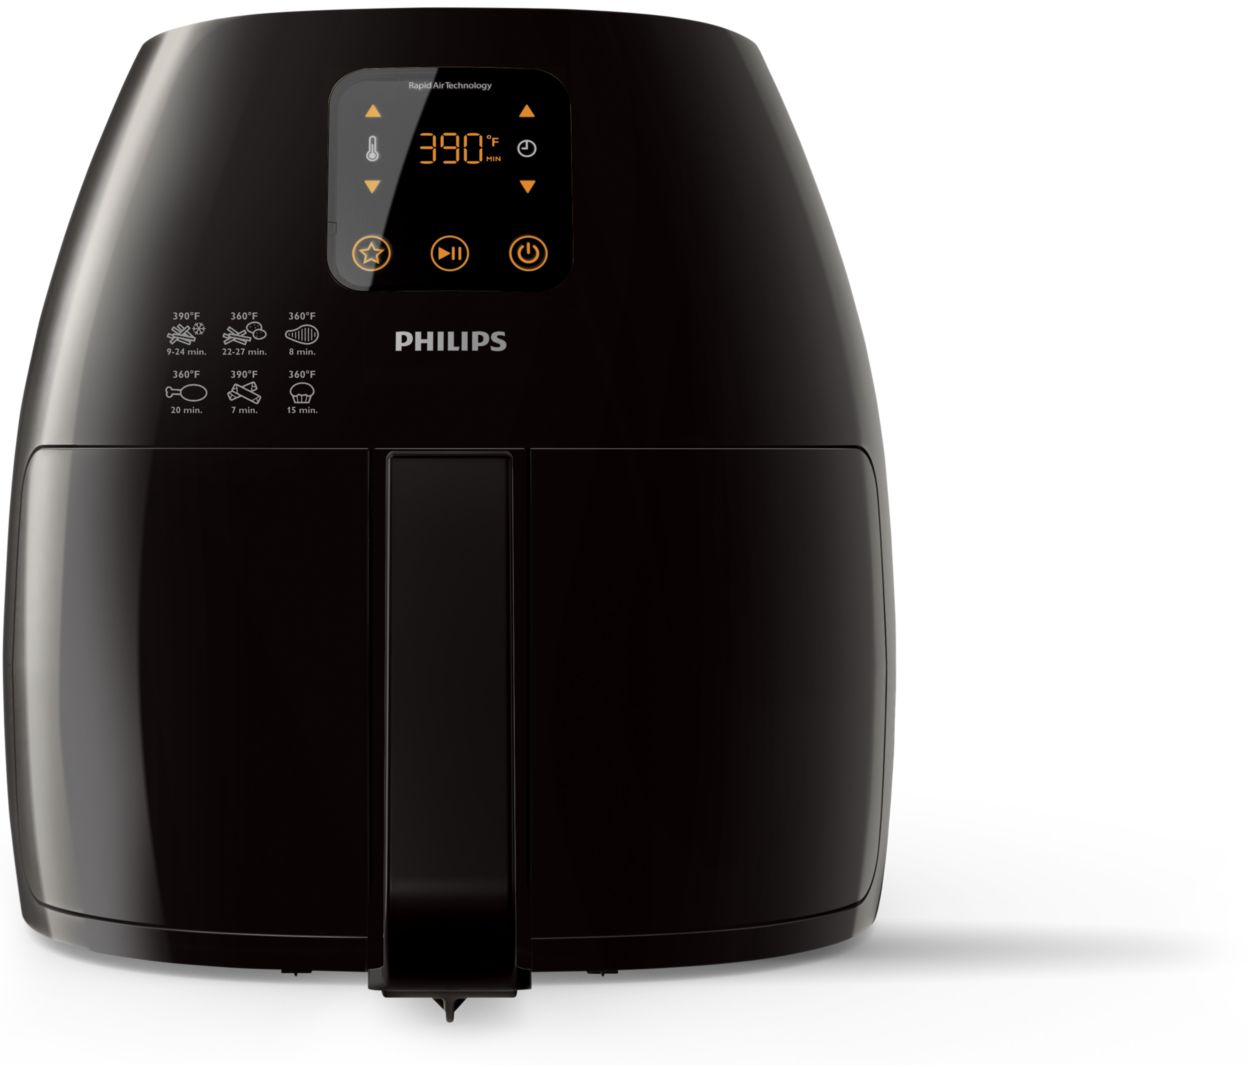 Philips Avance air fryer XXL reviewed